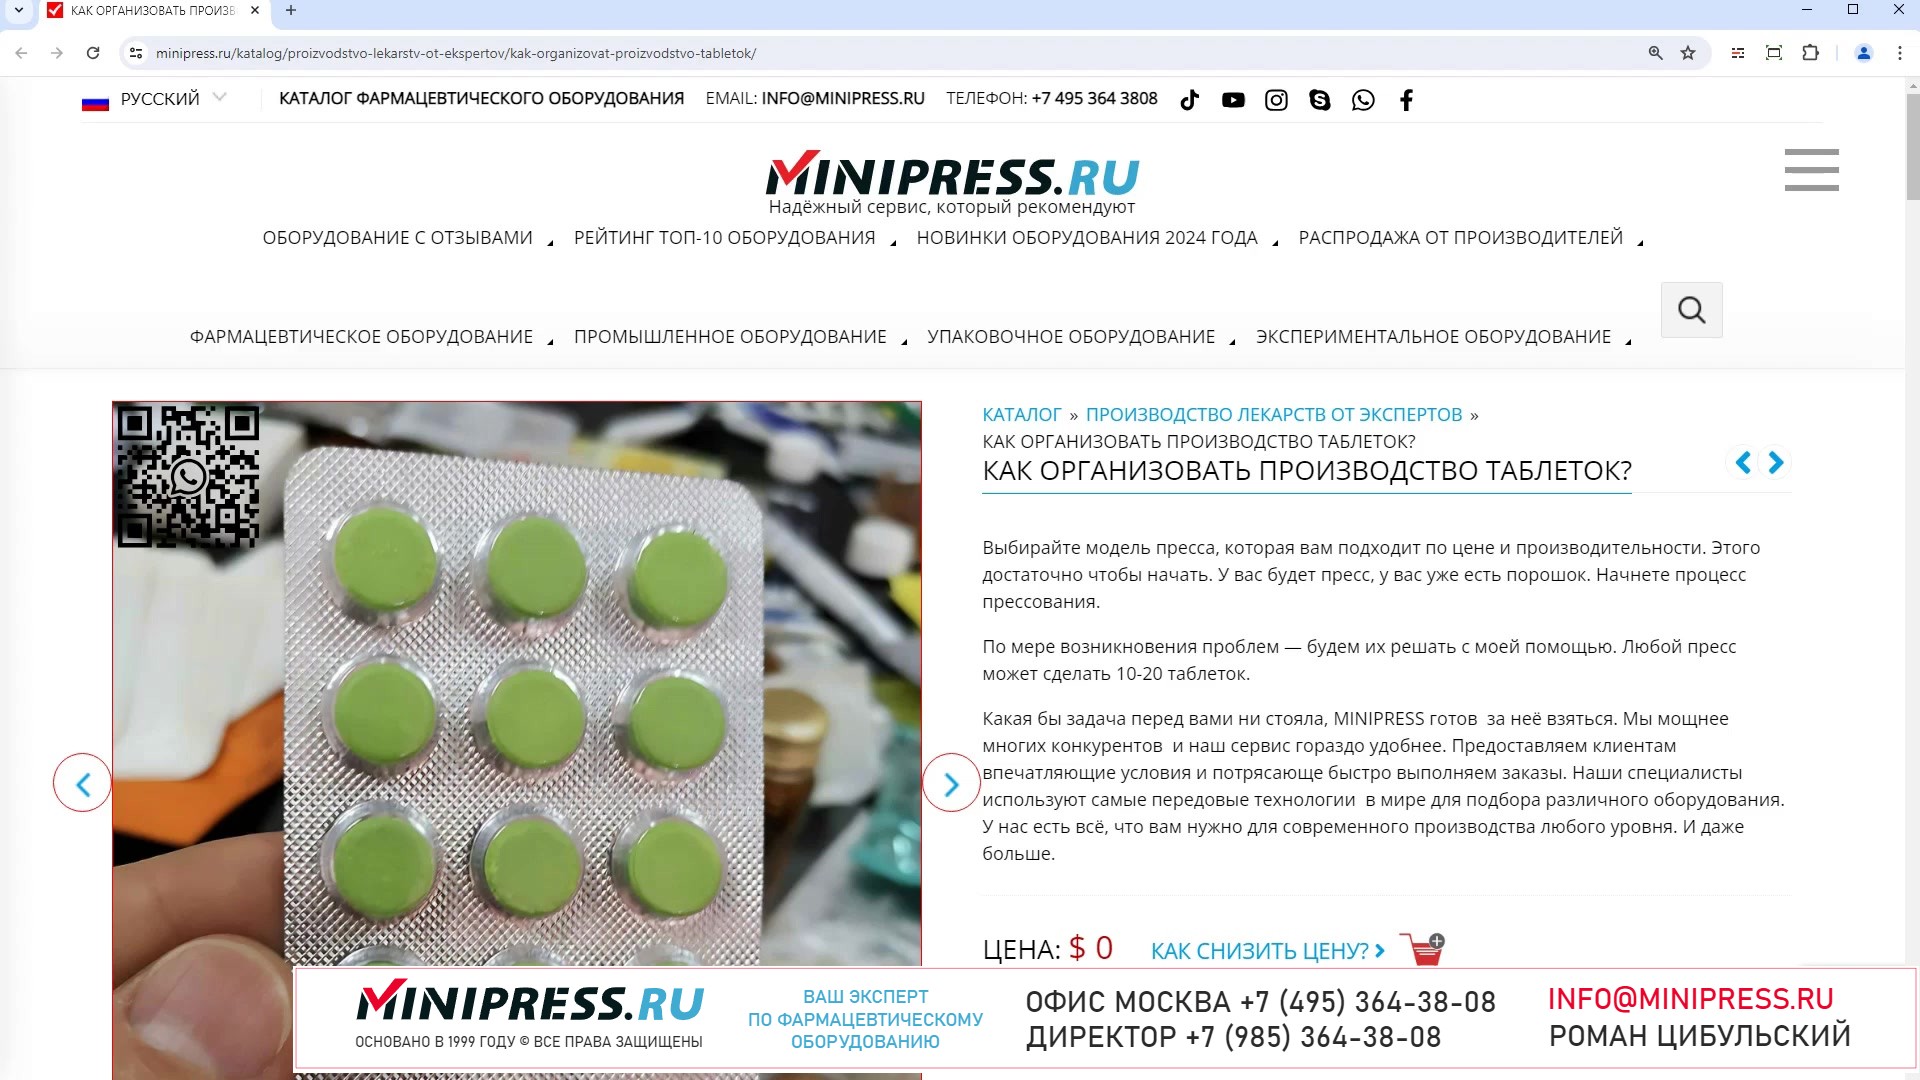 Minipress.ru Как организовать производство таблеток